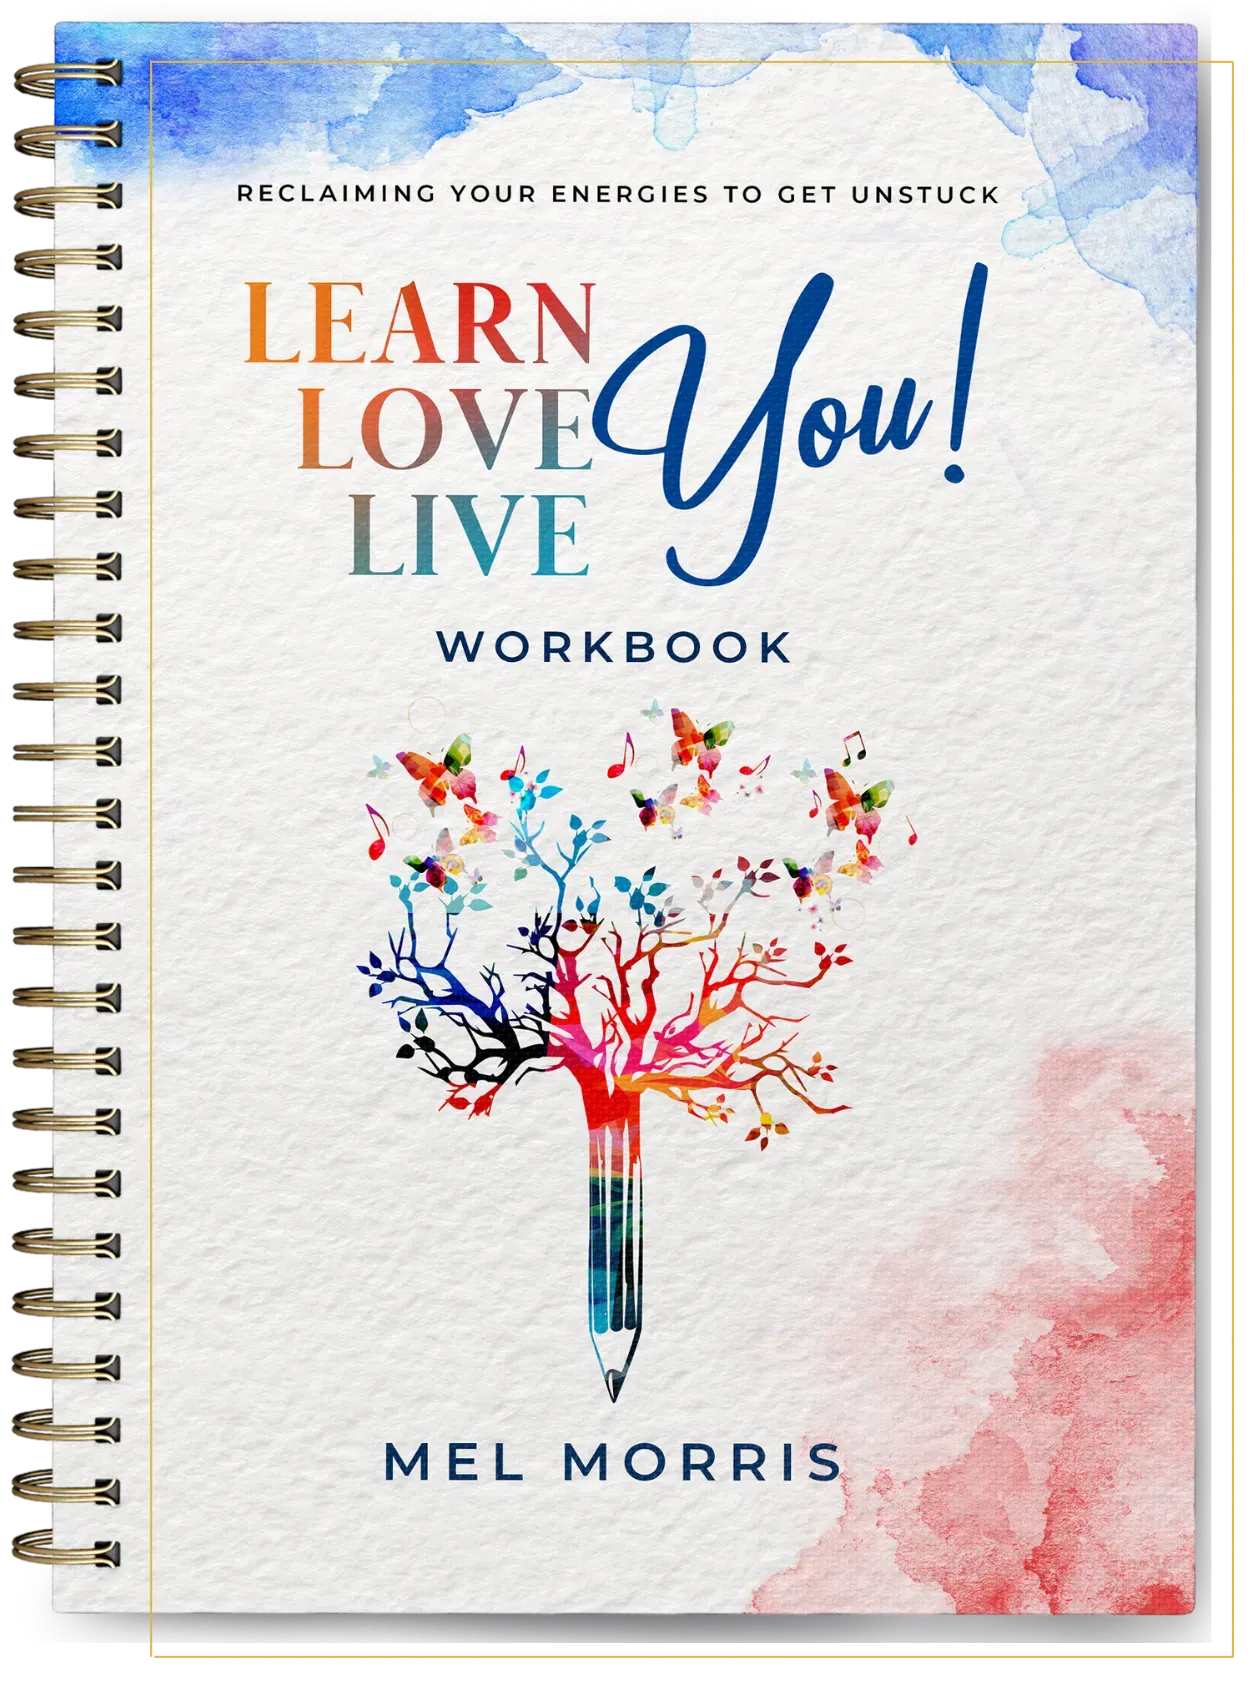 Learn. Love. Live You! WorkBook on display